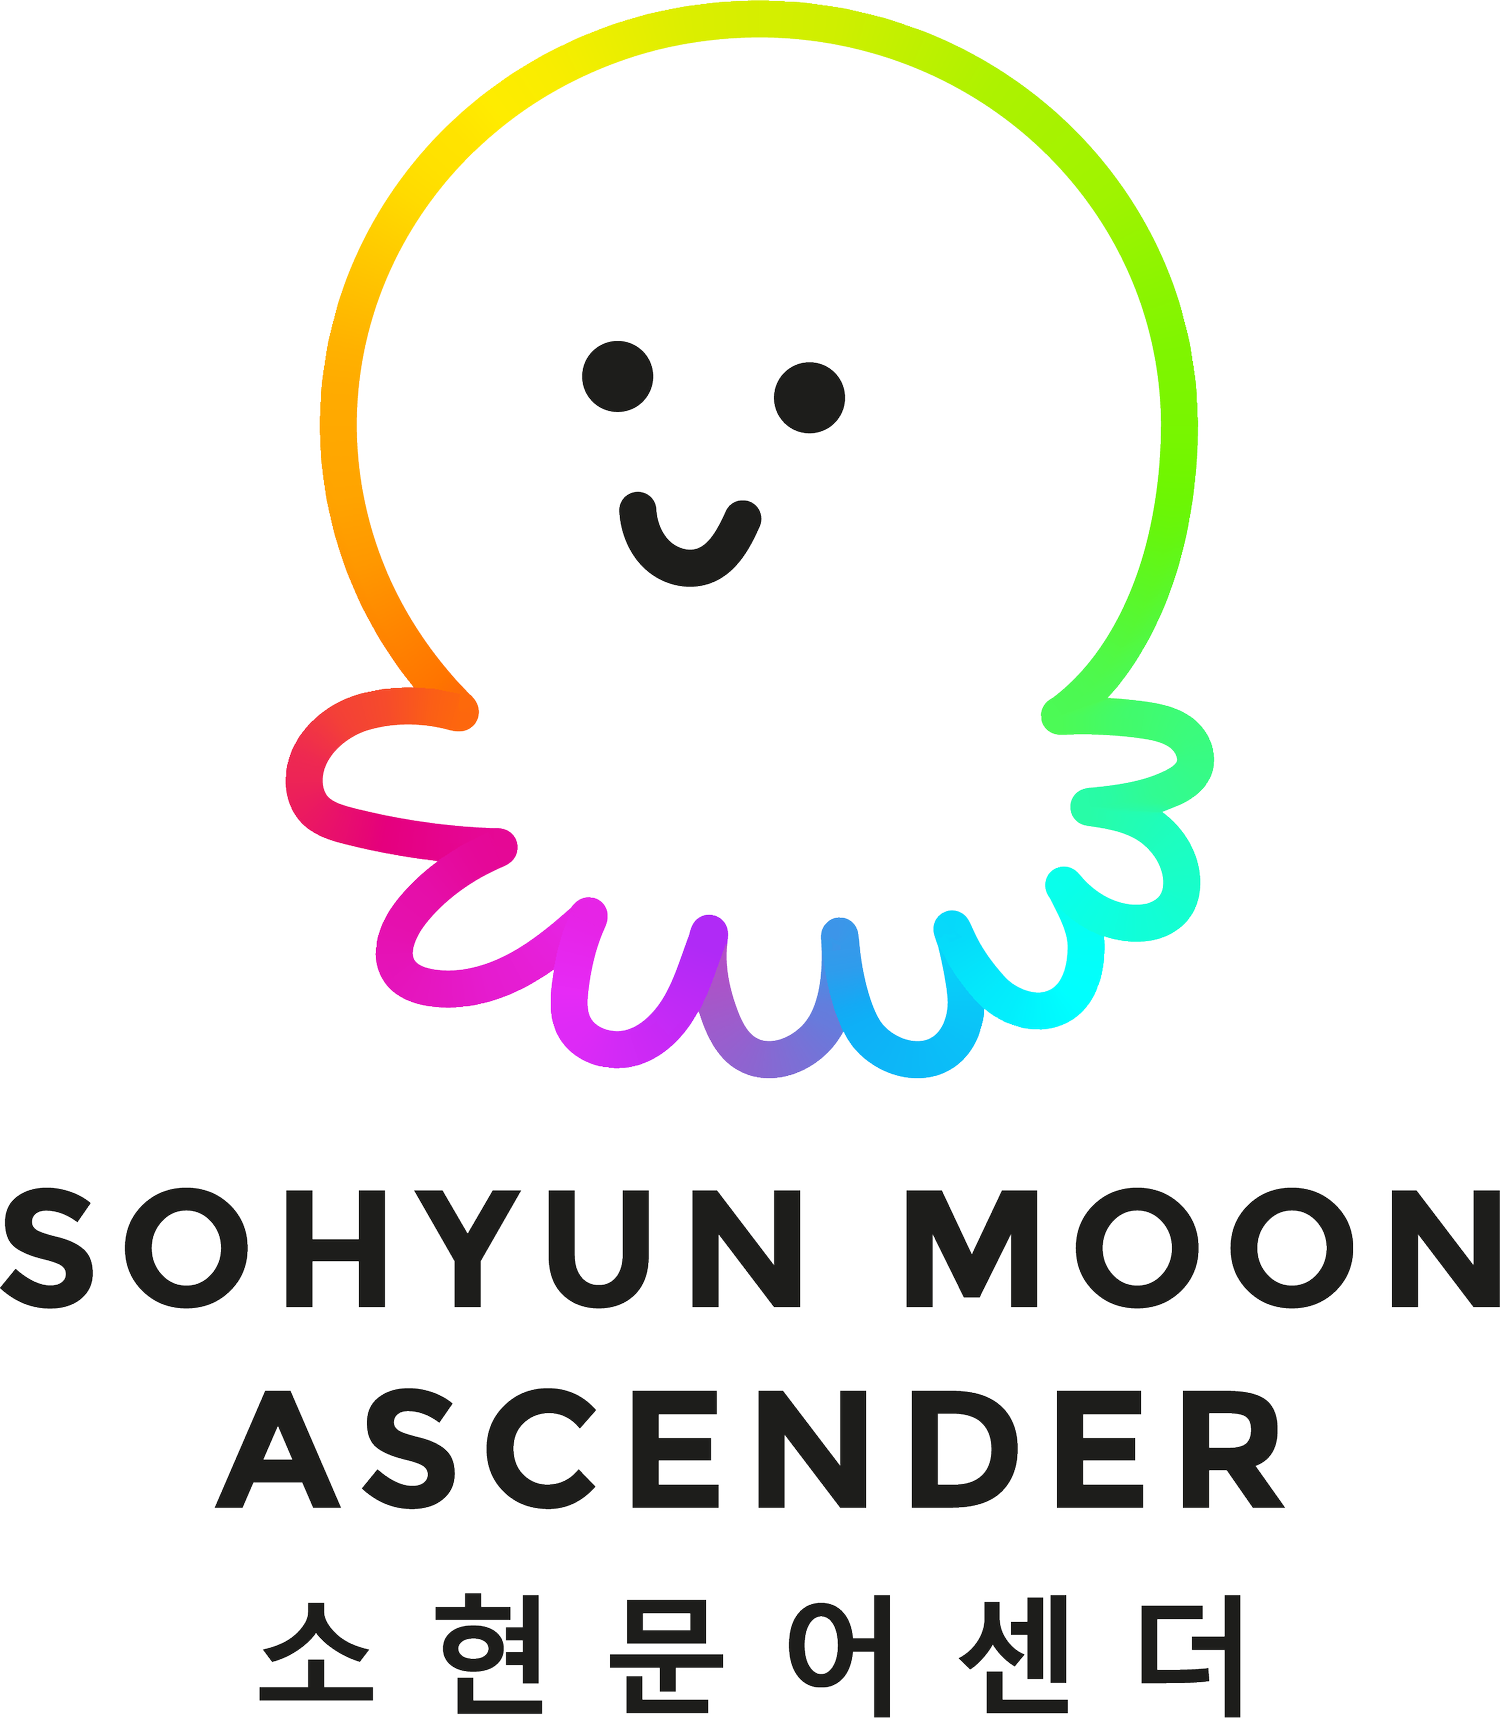 Sohyun Moon